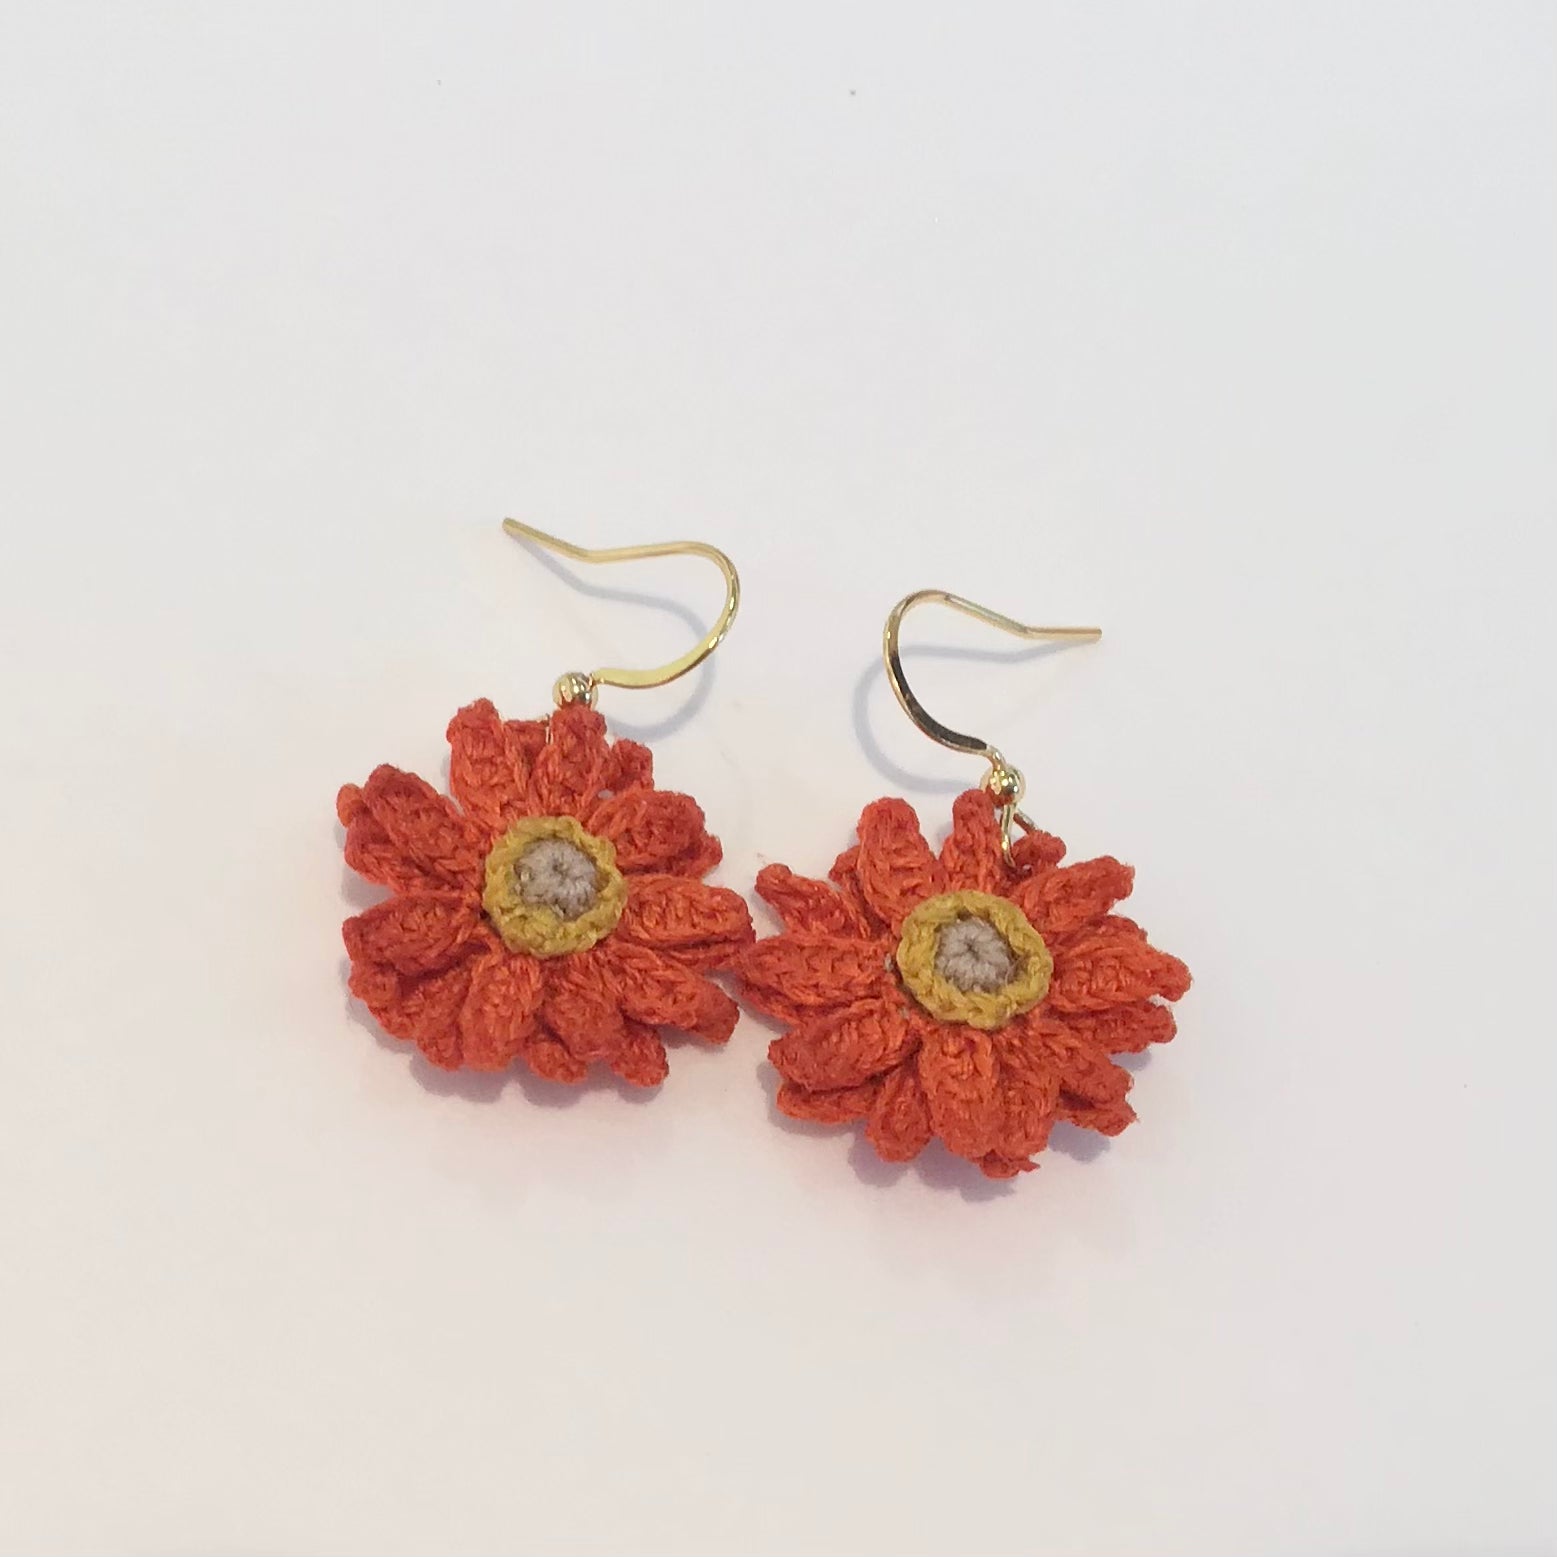 Hand crocheted Gerbera earrings